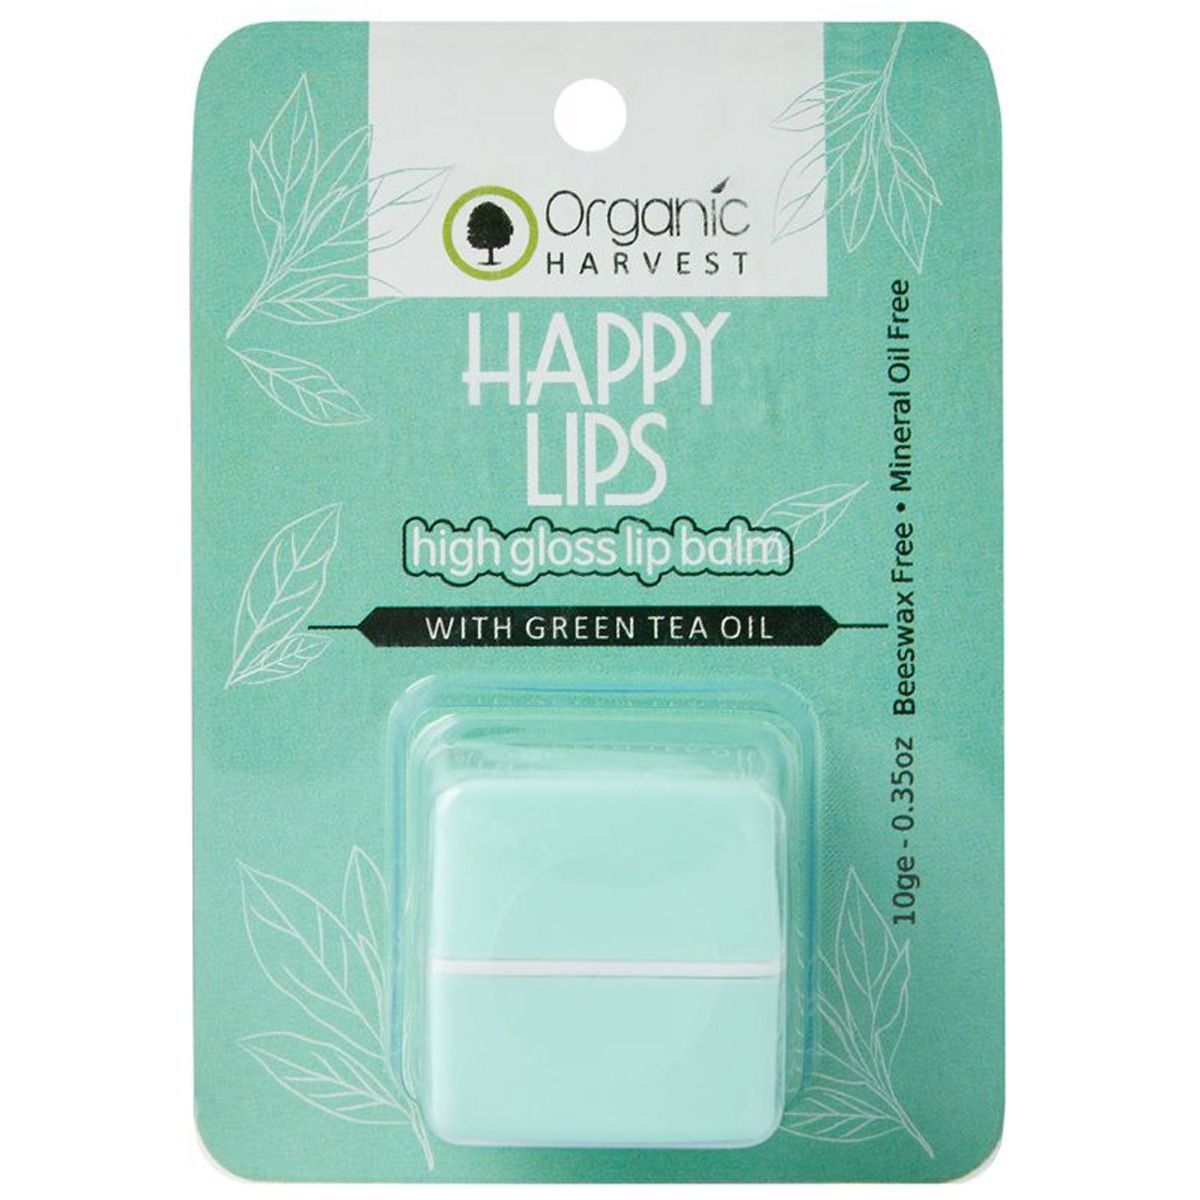 Organic Harvest Happy Lips Green Tea Lip Balm, 10 gm, Pack of 1 